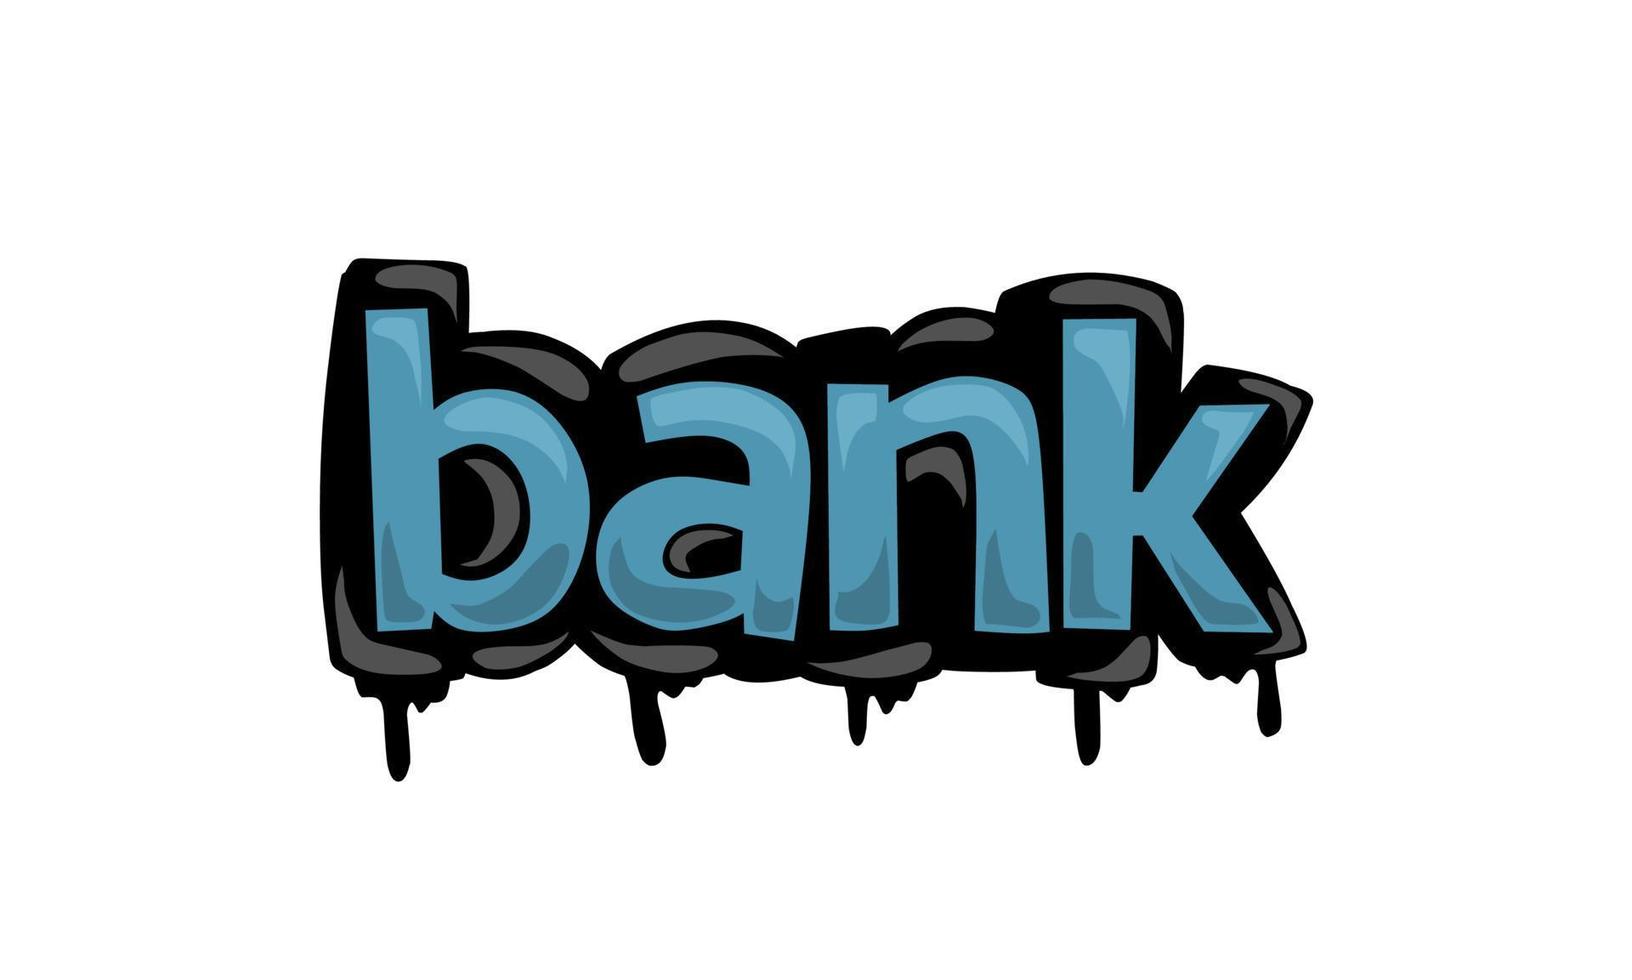 diseño vectorial de escritura bancaria sobre fondo blanco vector